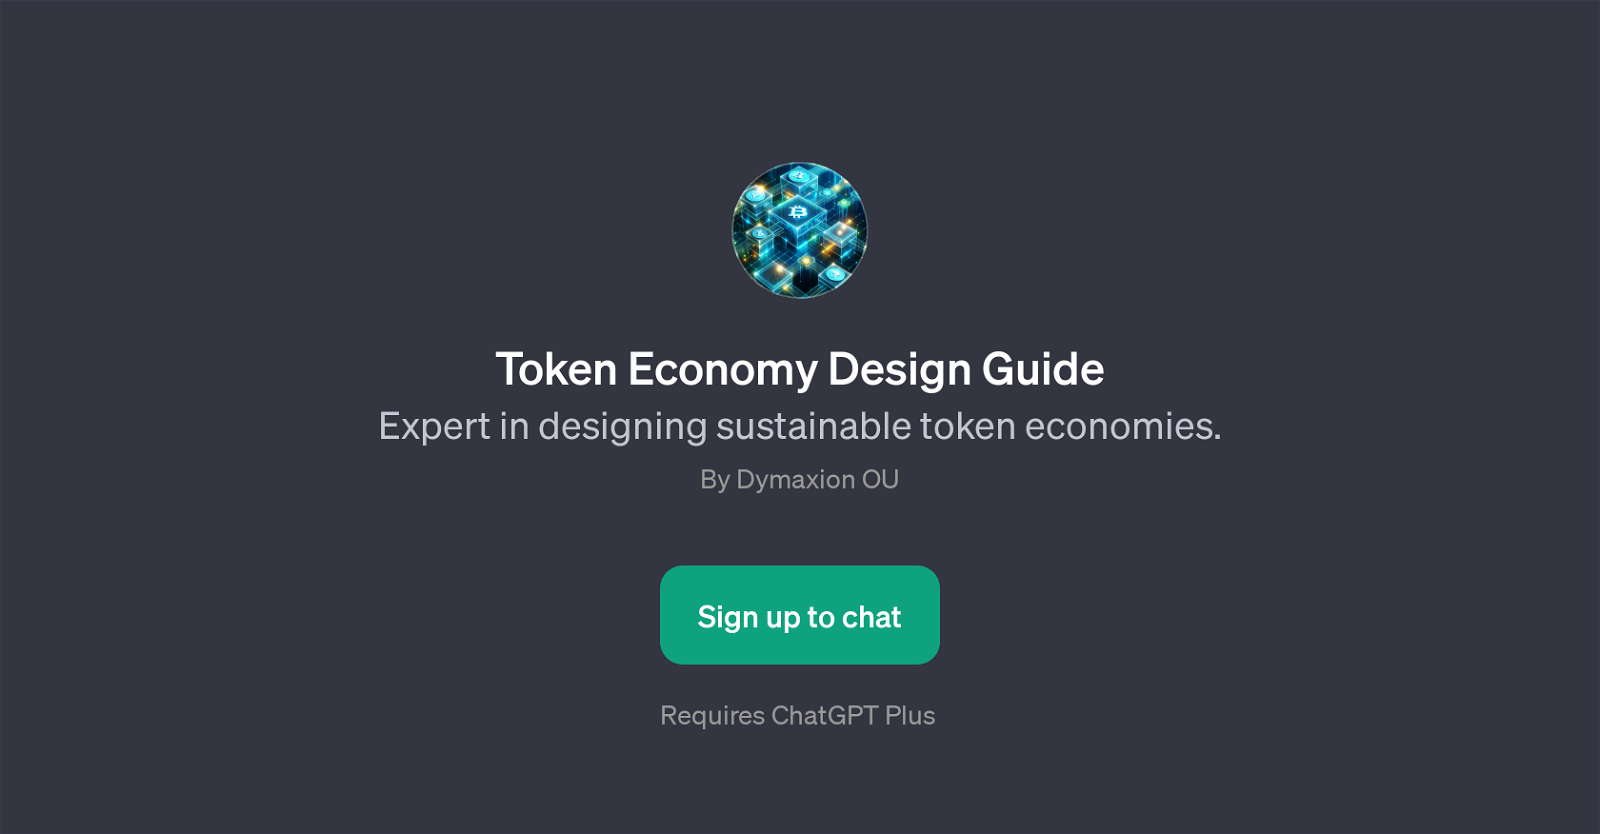 Token Economy Design Guide website